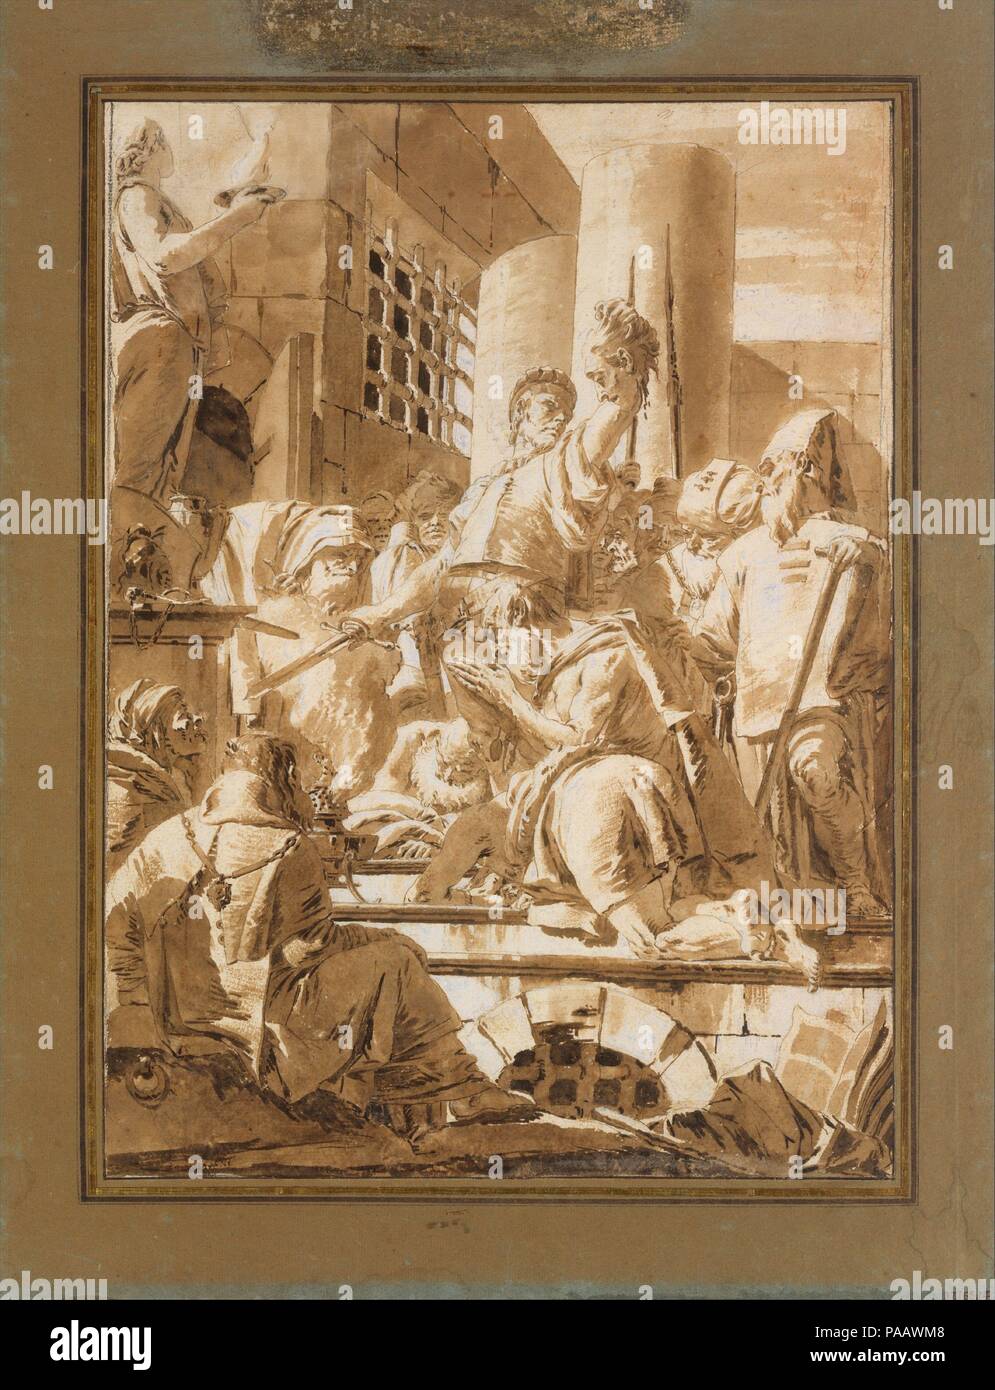 Beheading of Two Male Saints. Artist: Giovanni Battista Tiepolo (Italian, Venice 1696-1770 Madrid). Dimensions: 19-11/16 x 14-1/2 in.  (50 x 36.8 cm). Date: 1696-1770. Museum: Metropolitan Museum of Art, New York, USA. Stock Photo